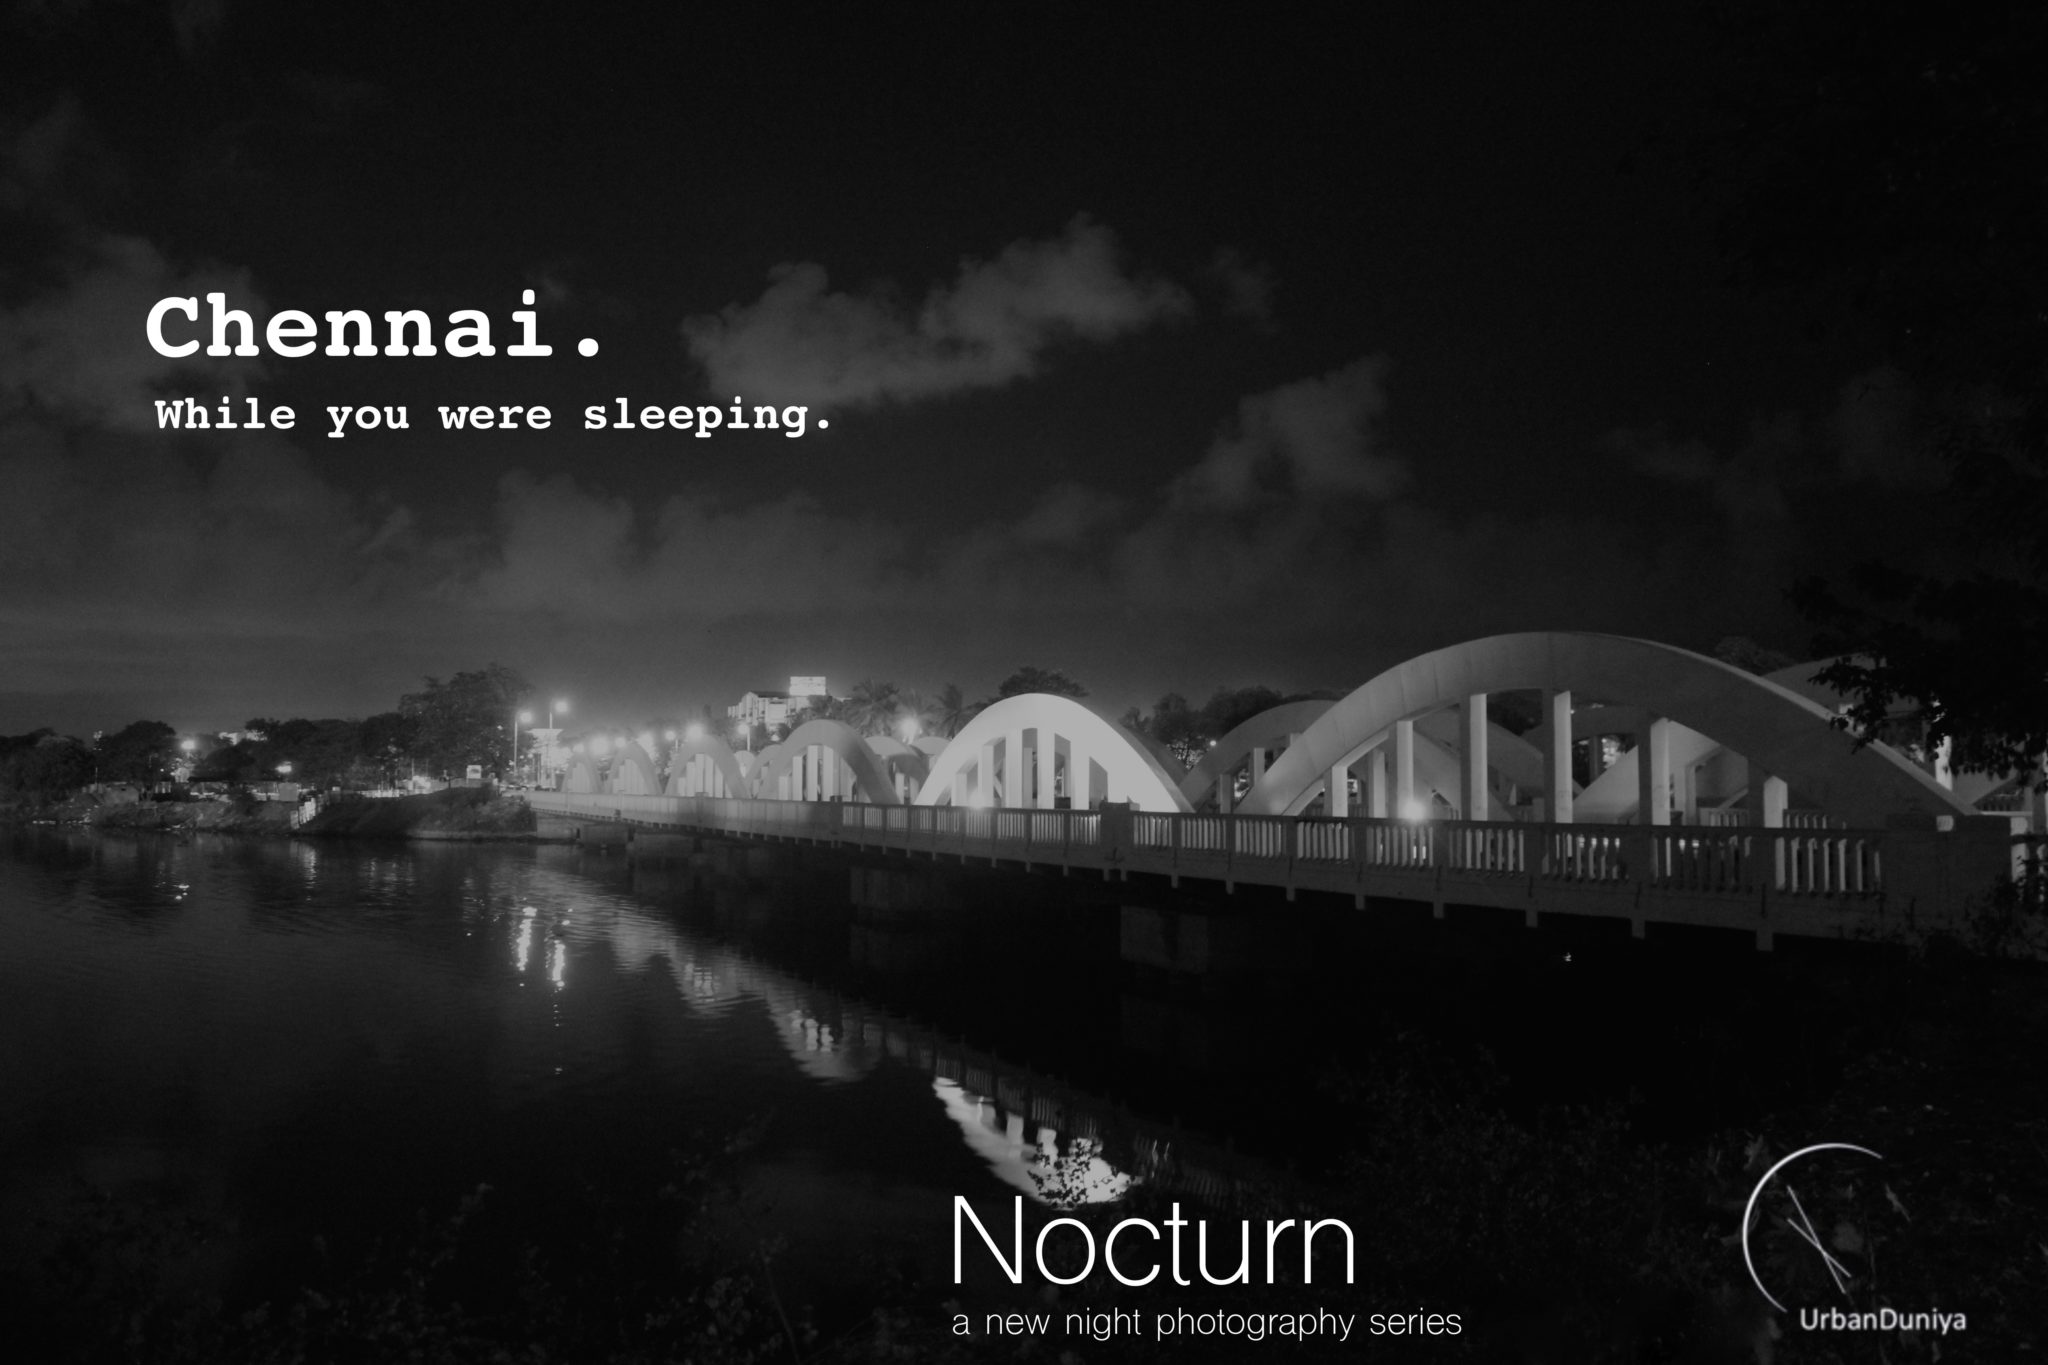 Chennai nocturn ad